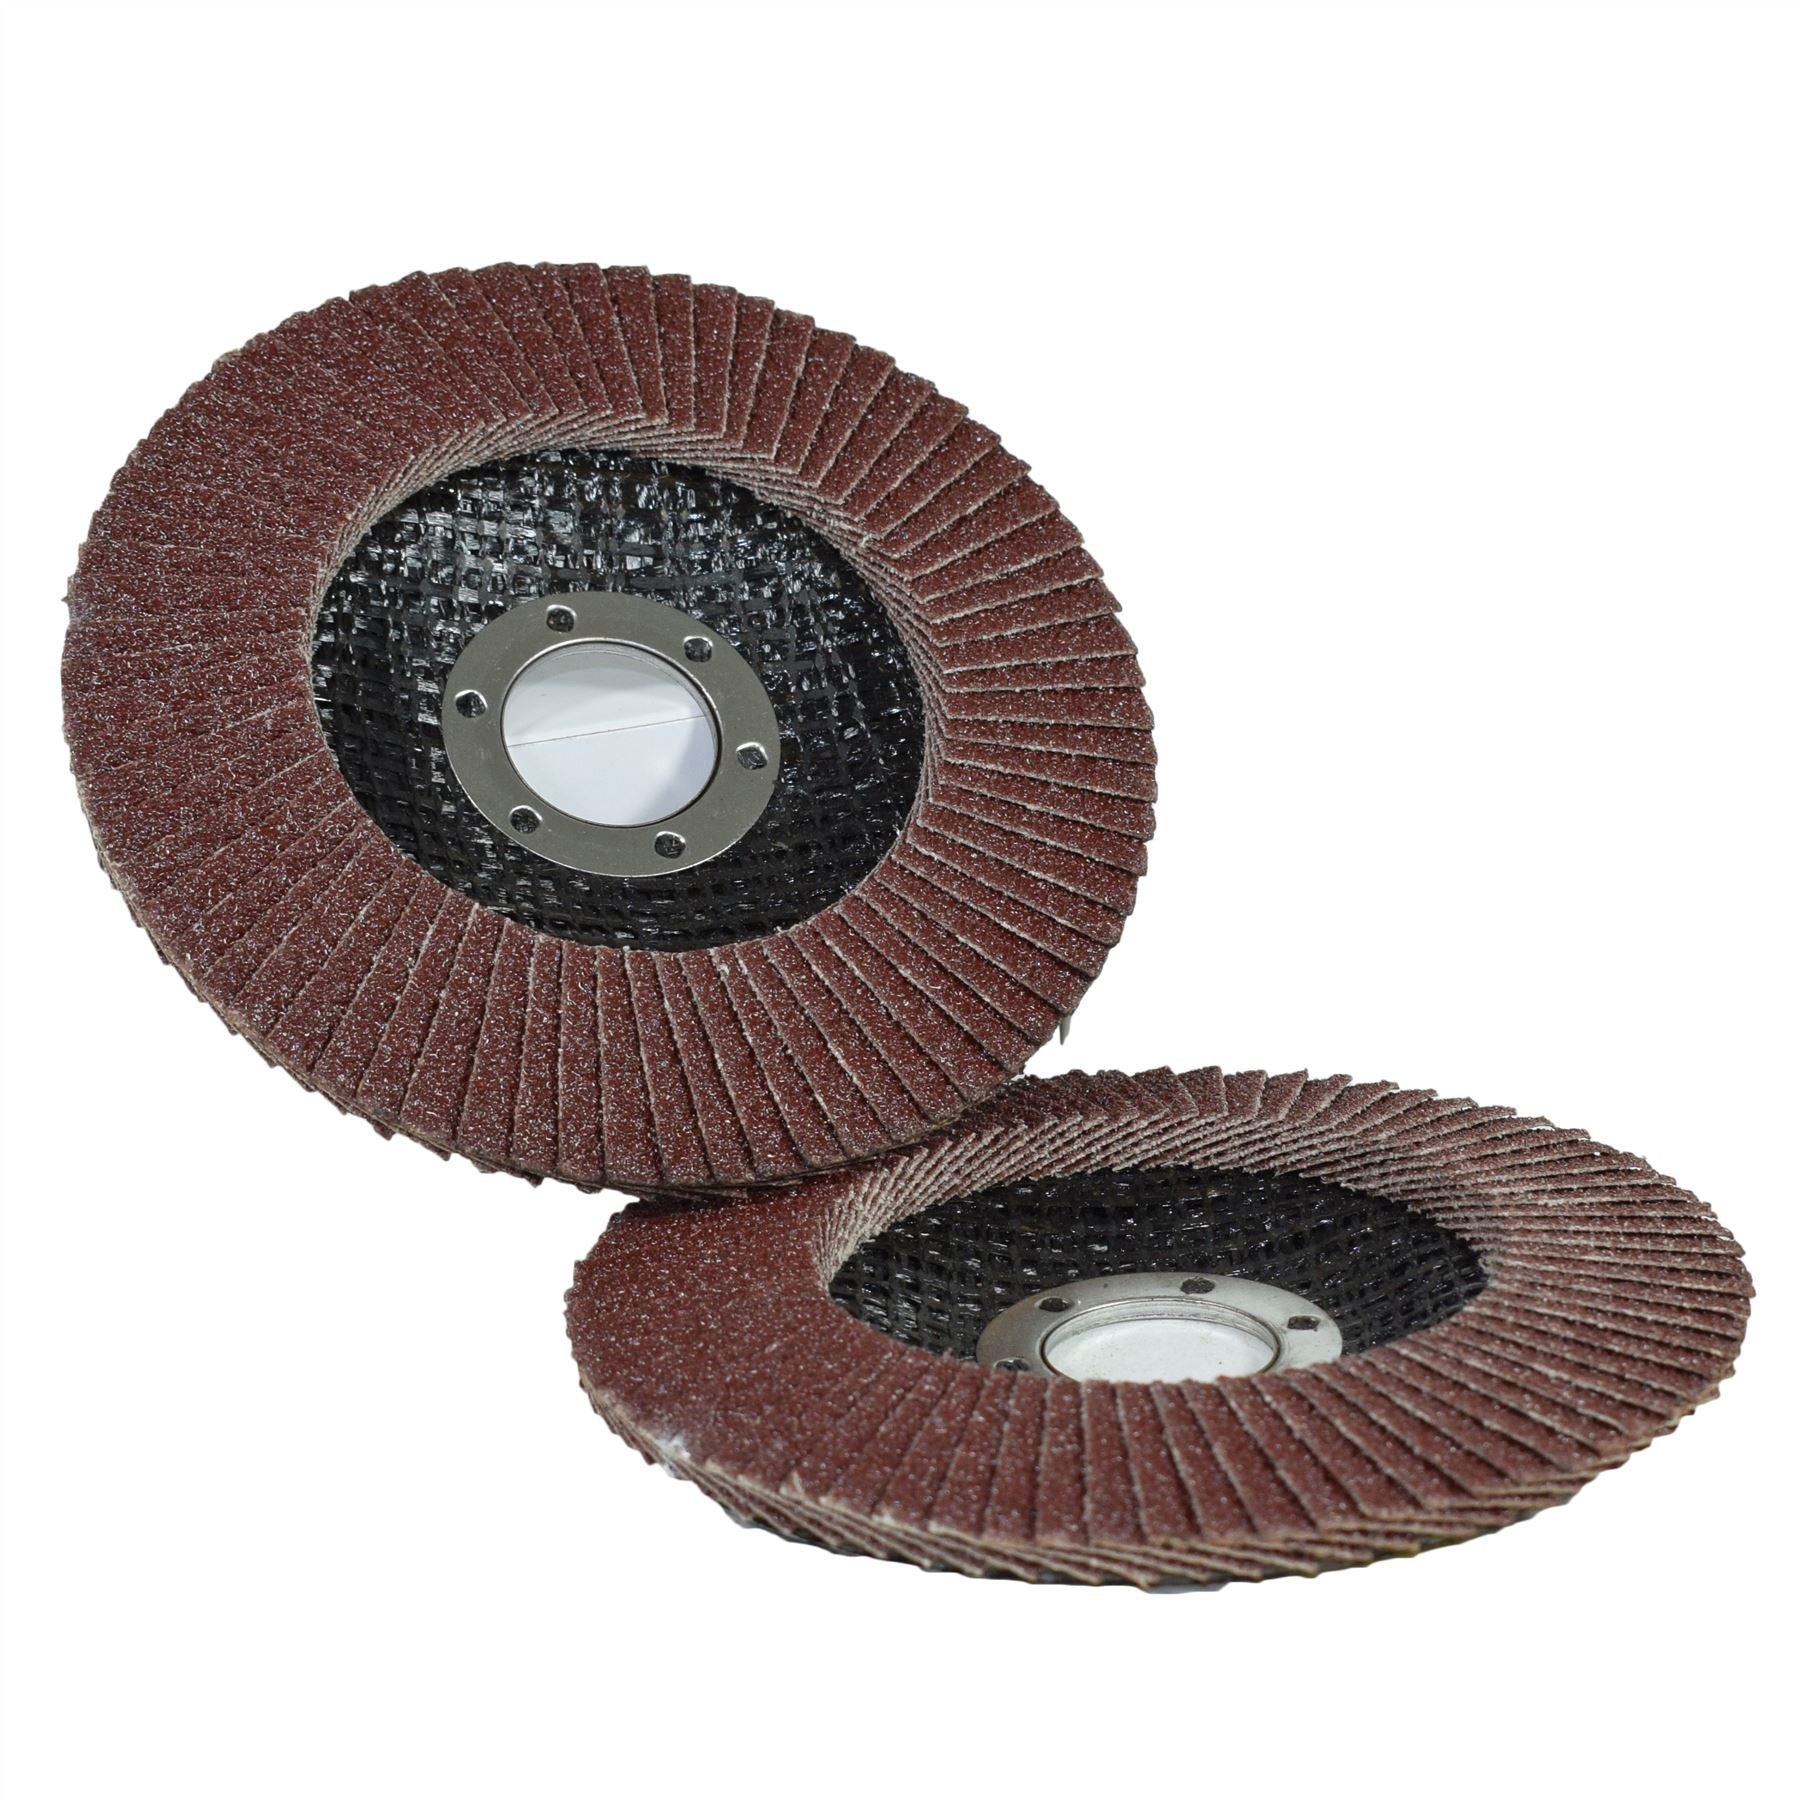 2 x 80 Grit Flap Discs Sanding Grinding Rust Removing For 4-1/2" (115mm) Grinder